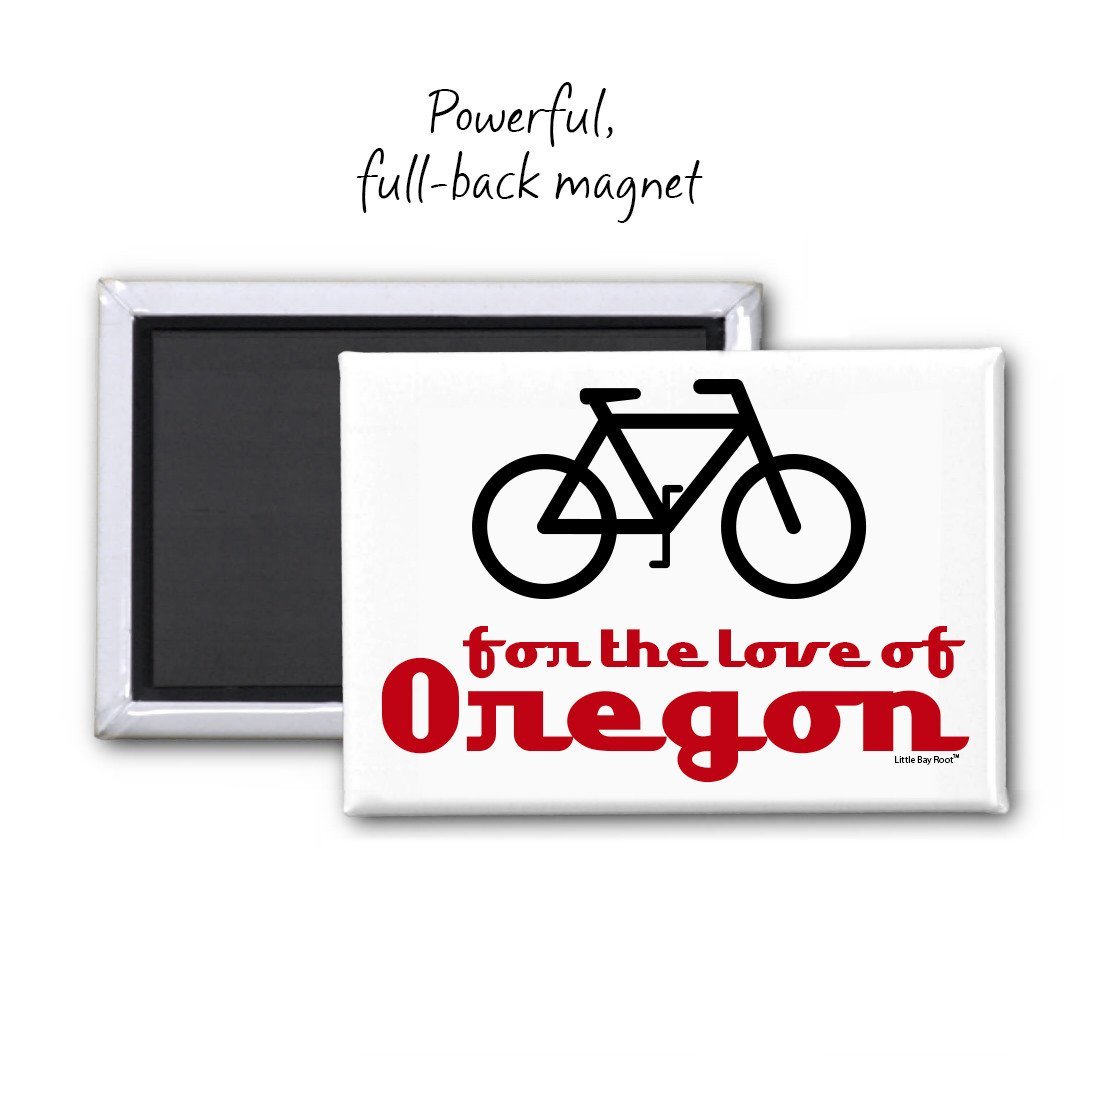 Oregon Duck | Refrigerator Magnet